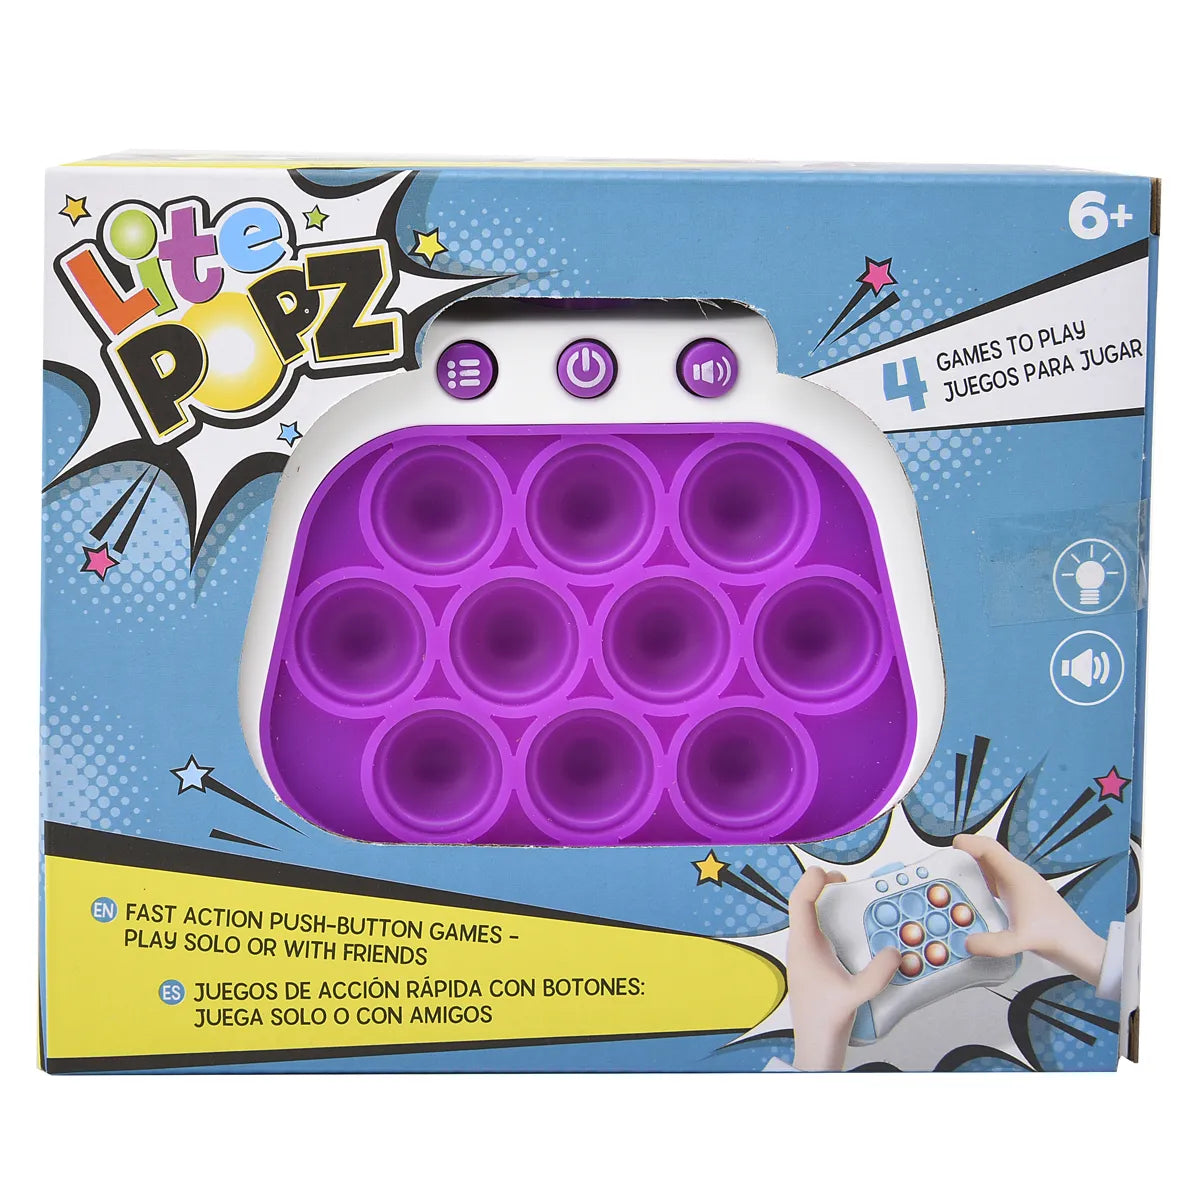 Lite Popz Push Button Game - Purple